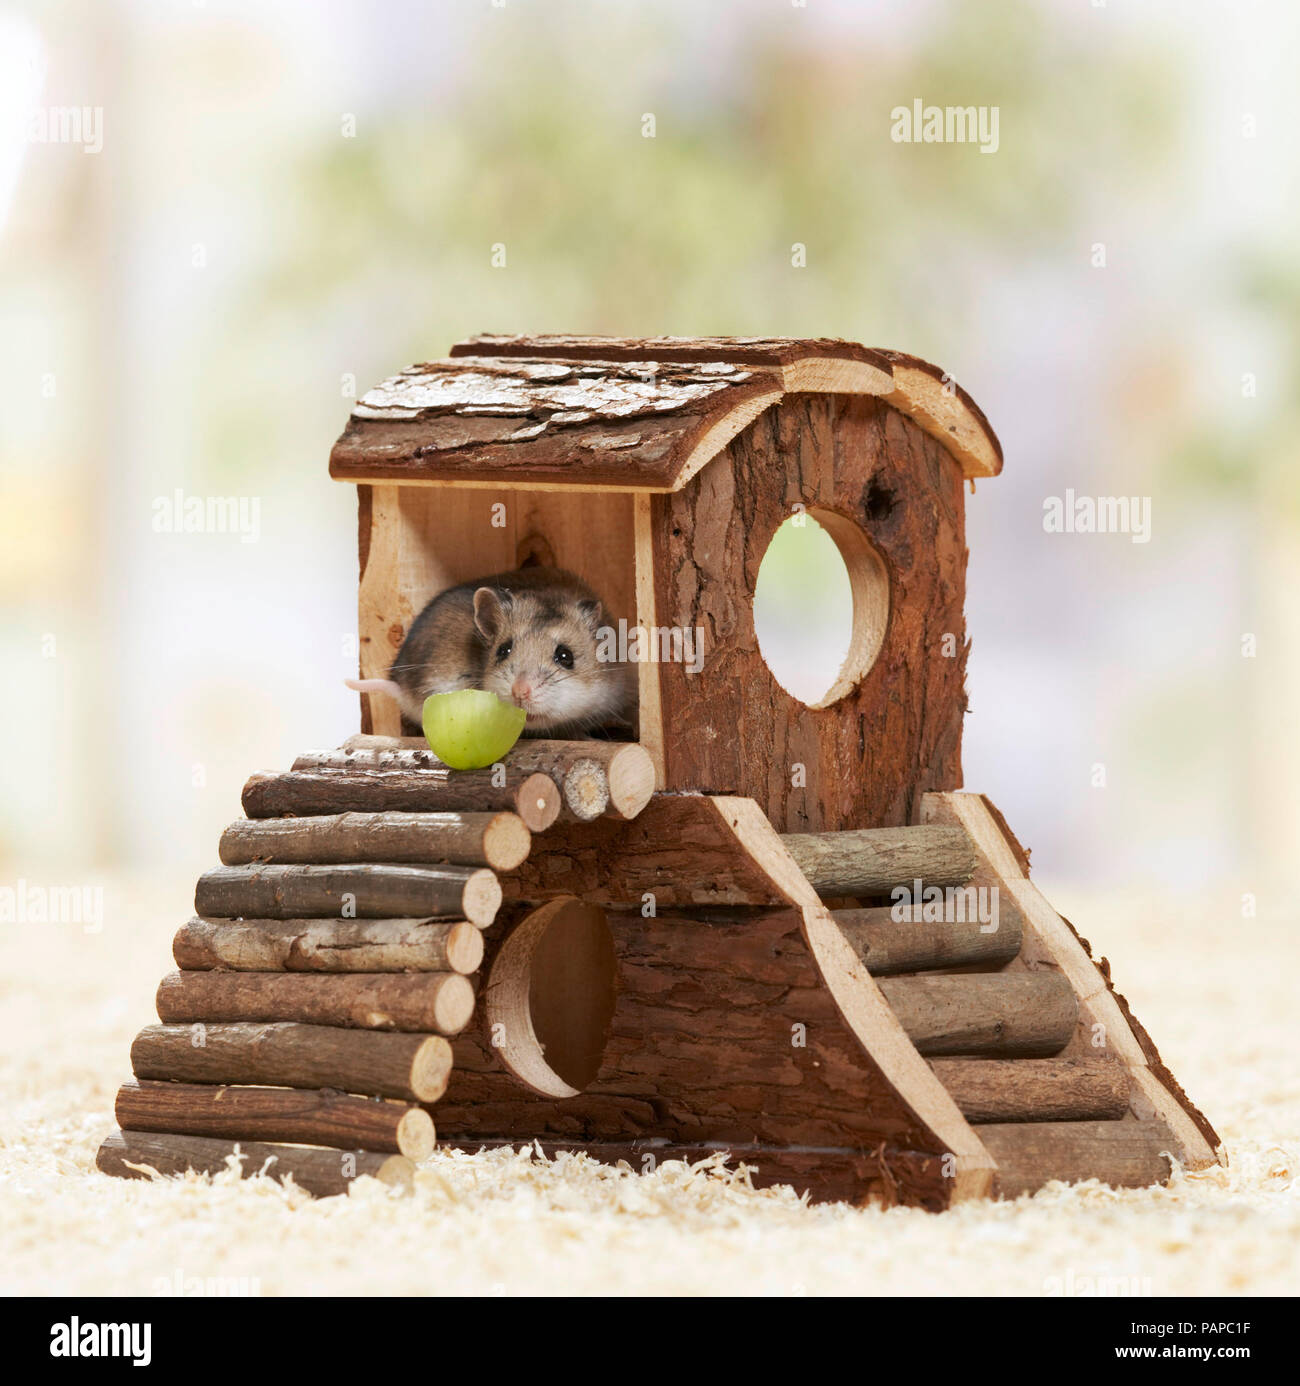 De hámster chino (Cricetulus griseus barabensis Cricetulus griseus) en un self-made Hamster playground. Alemania Foto de stock